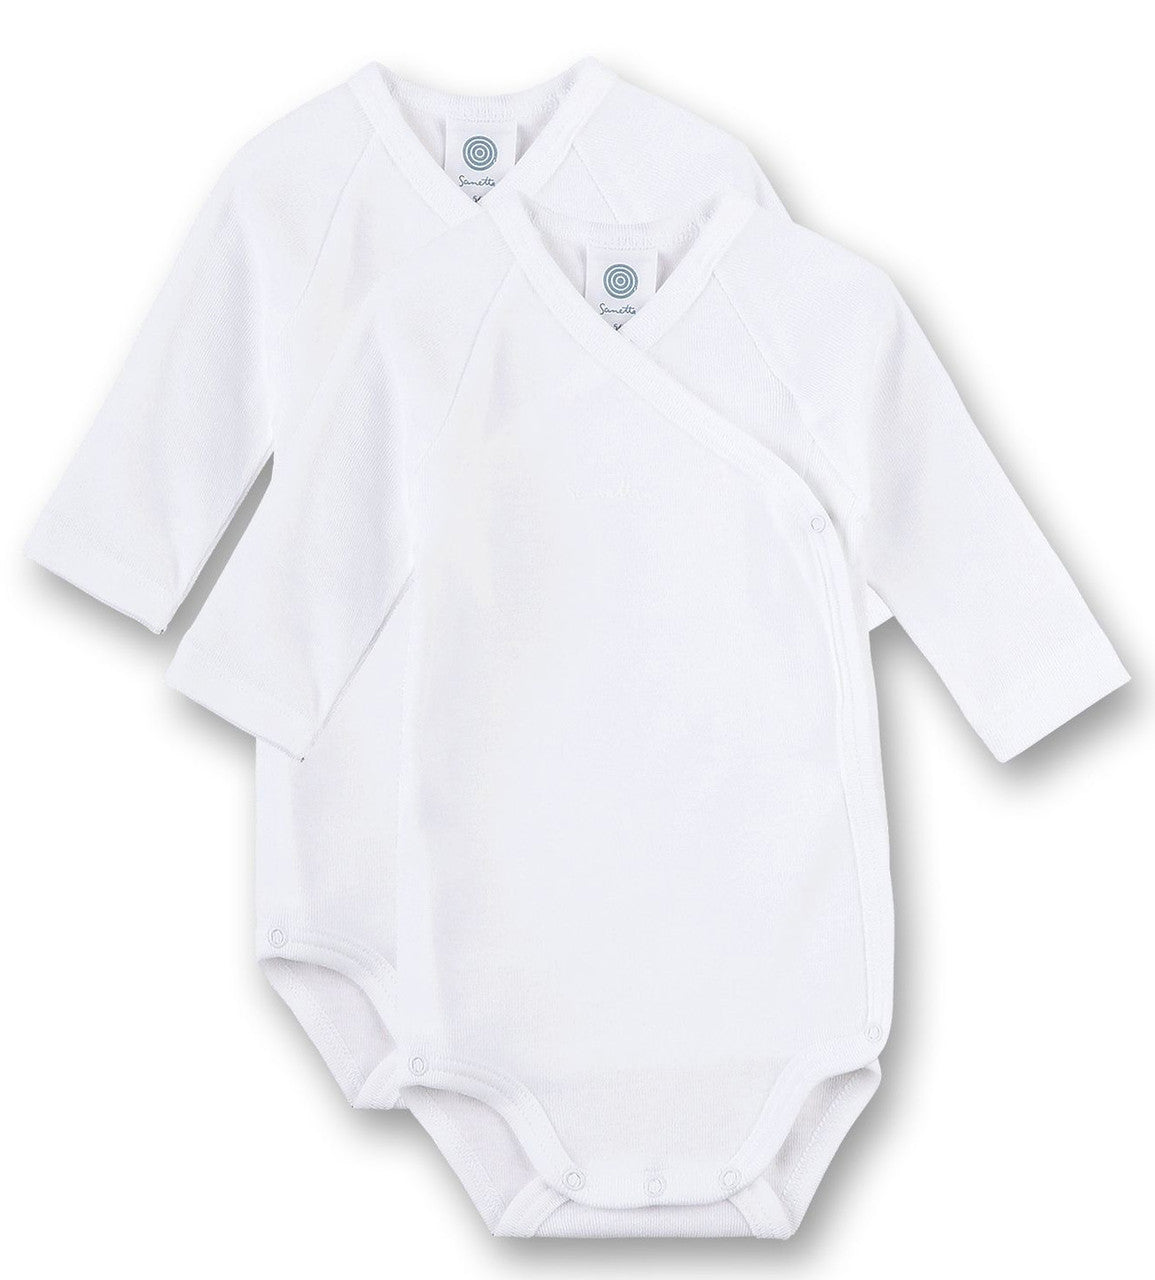 Sanetta White Bodysuit Set 322744 (322744-10)